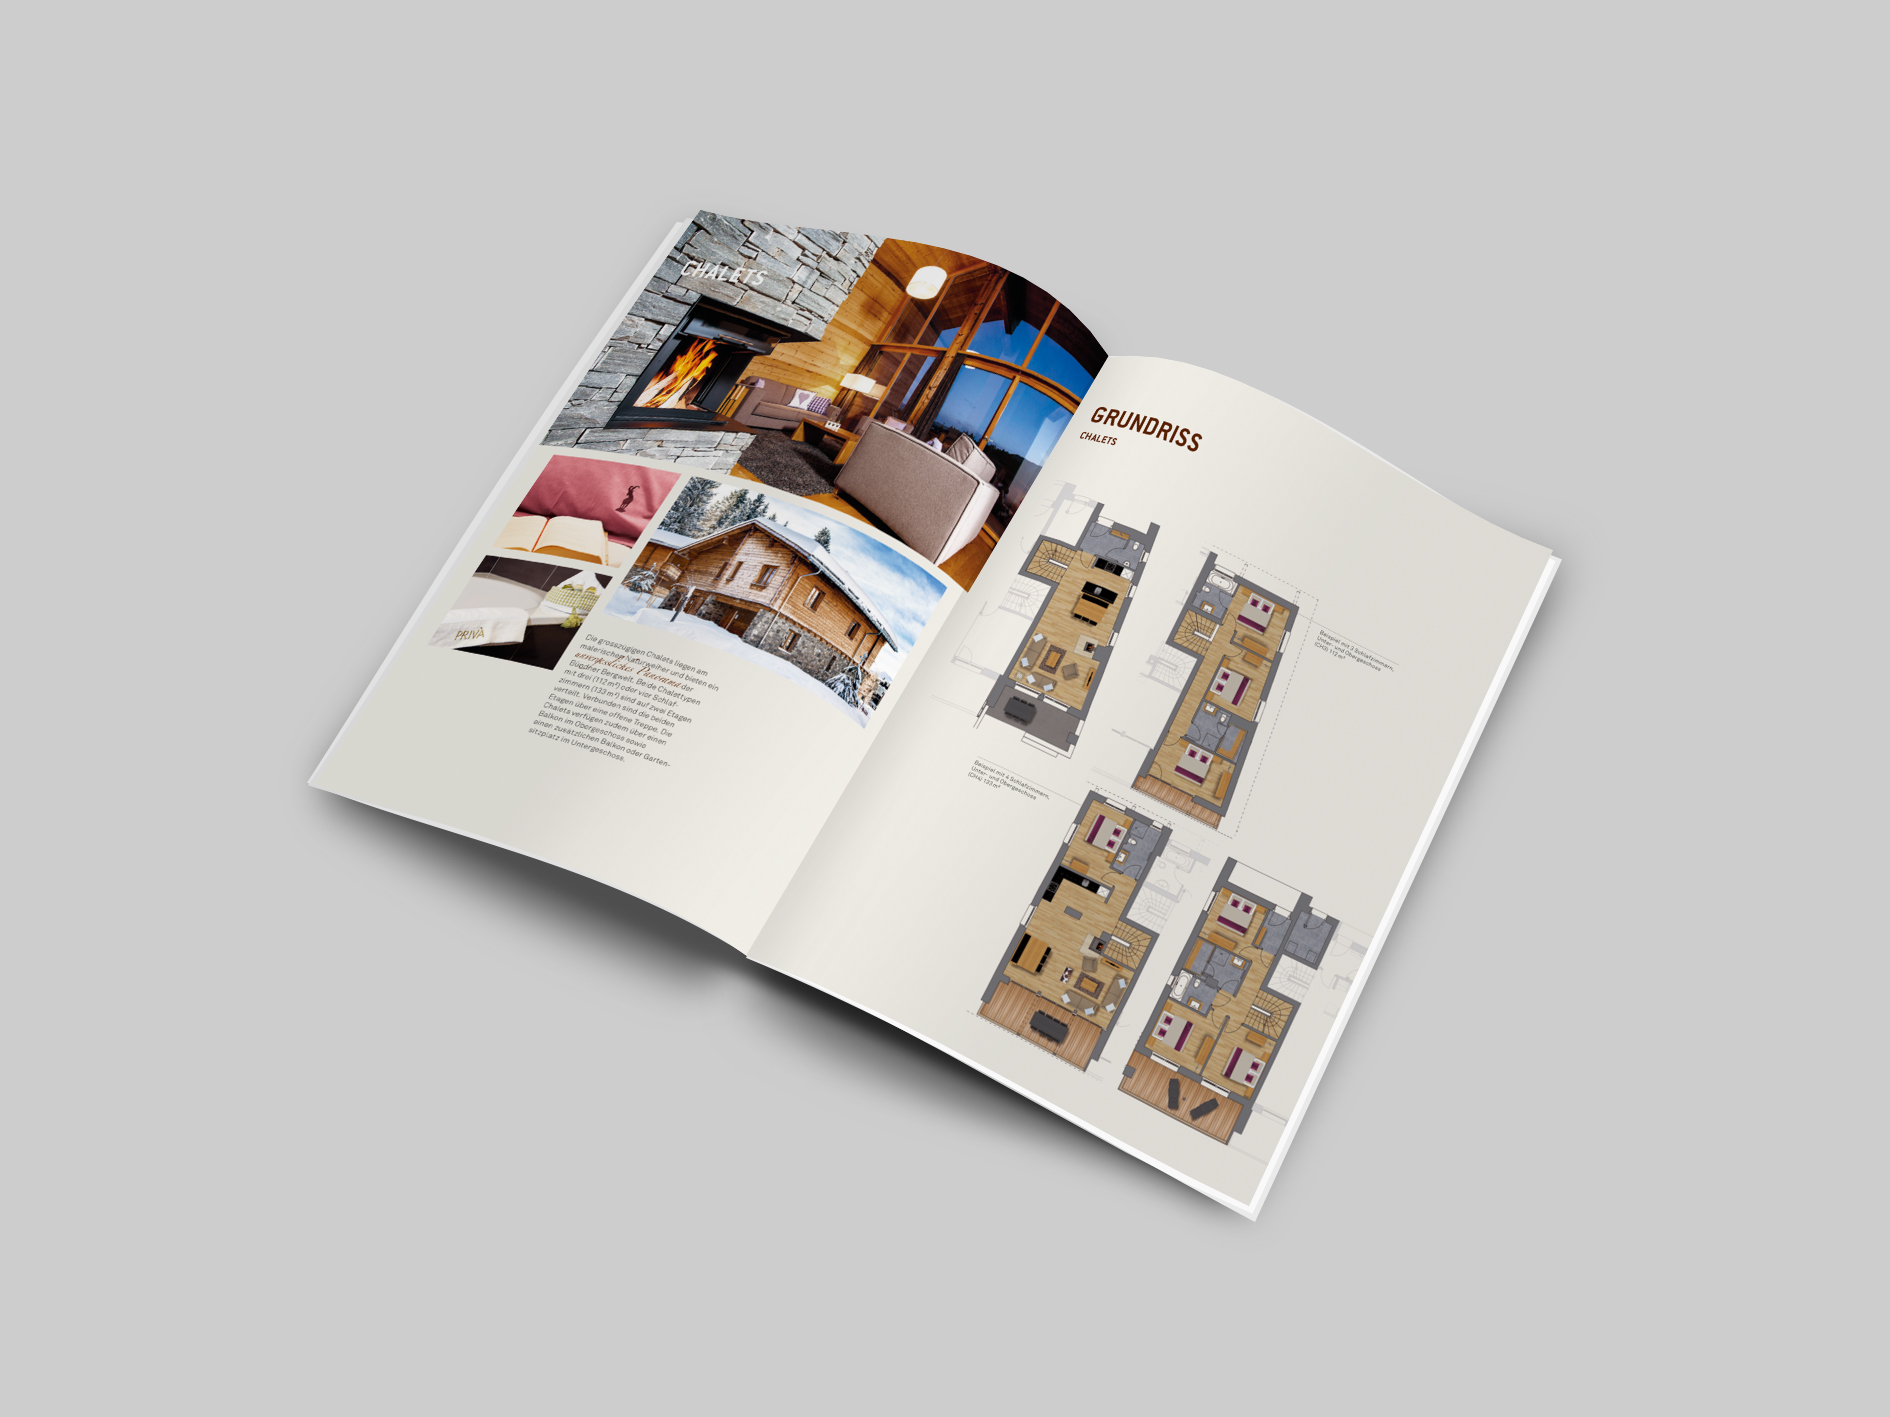 PRIVA Alpine Lodge, Lenzerheide, Editorial Design, Grafik Bern, Grafiker Bern